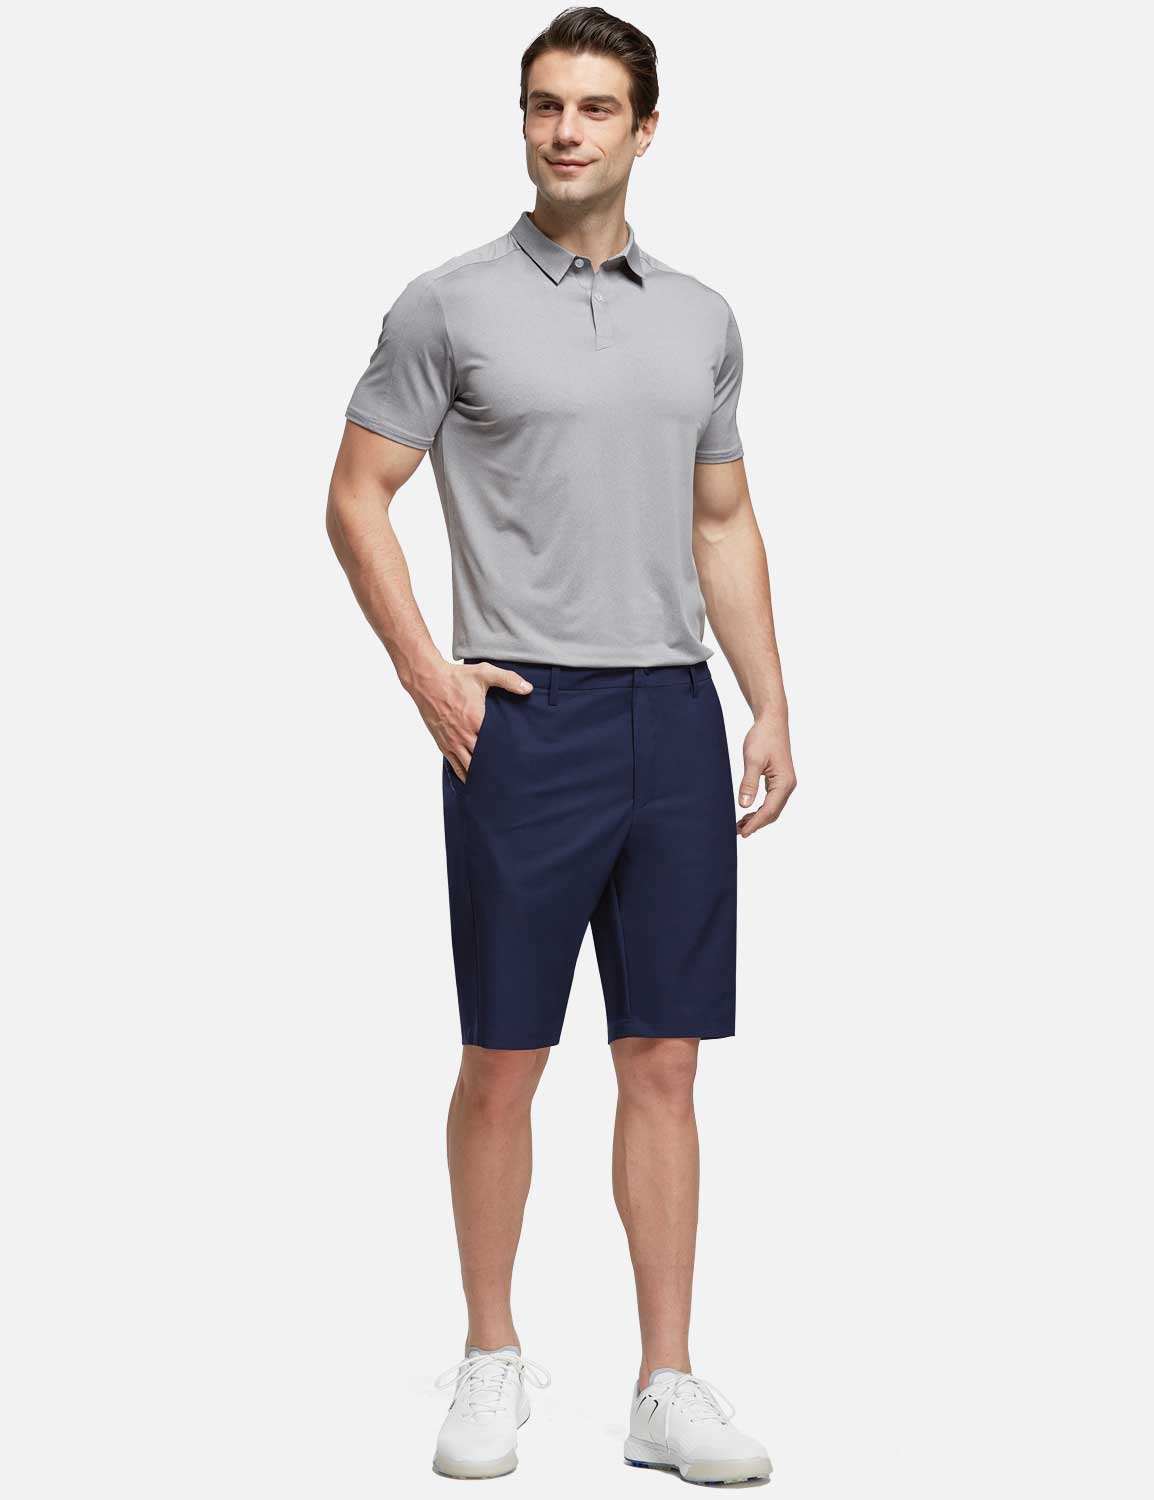 Baleaf Men's 10' UPF 50+ Lightweight Golf Shorts w Zipper Pockets cga005 Medieval Blue Full